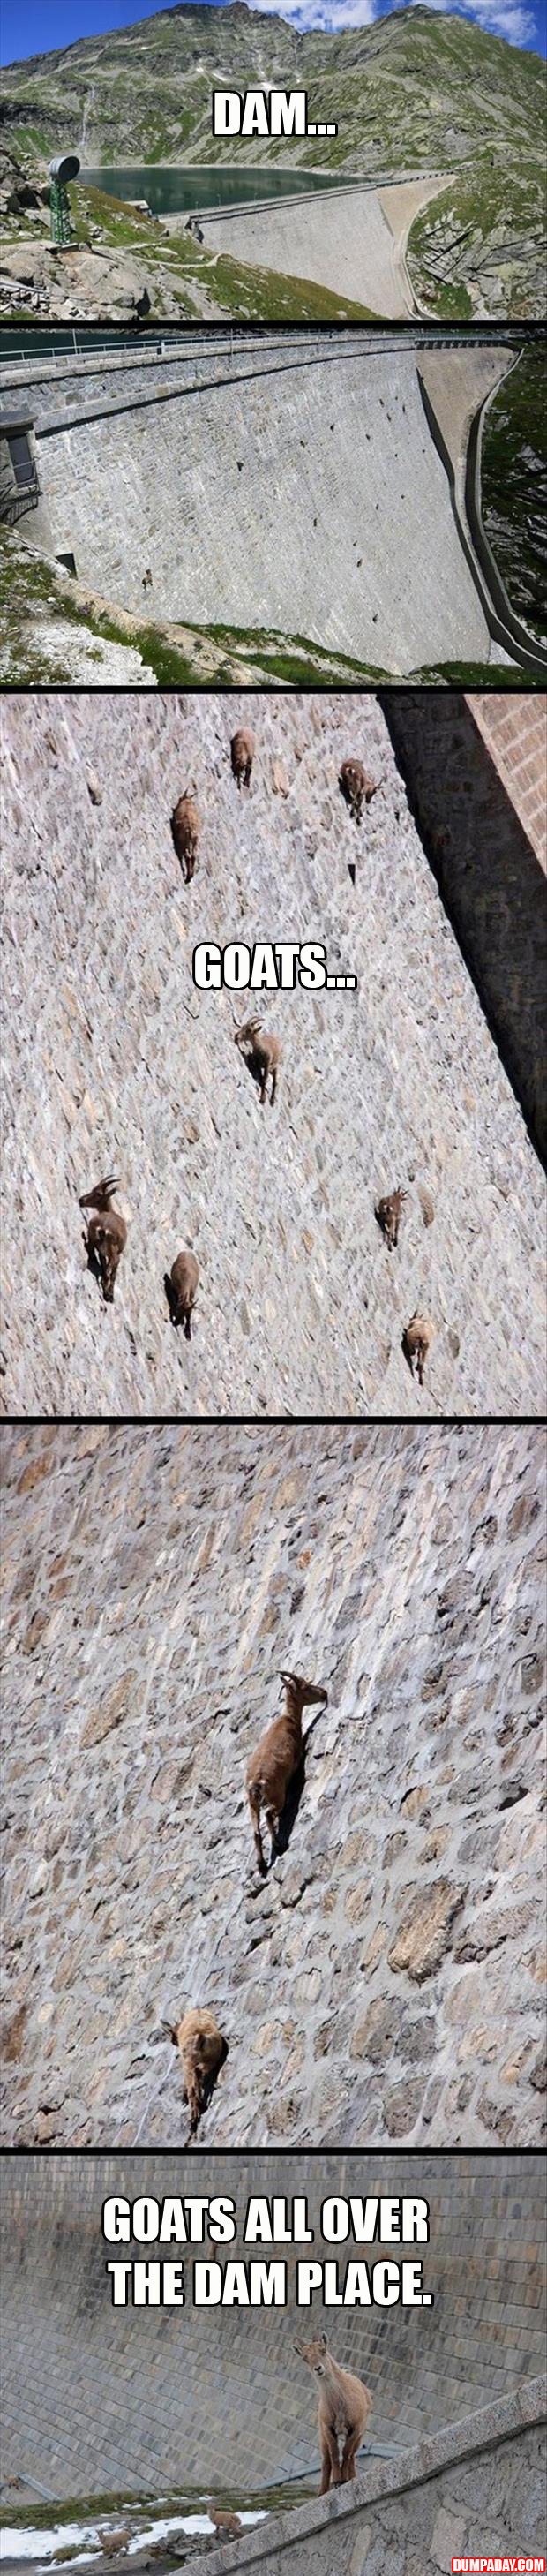 goats all over the damn